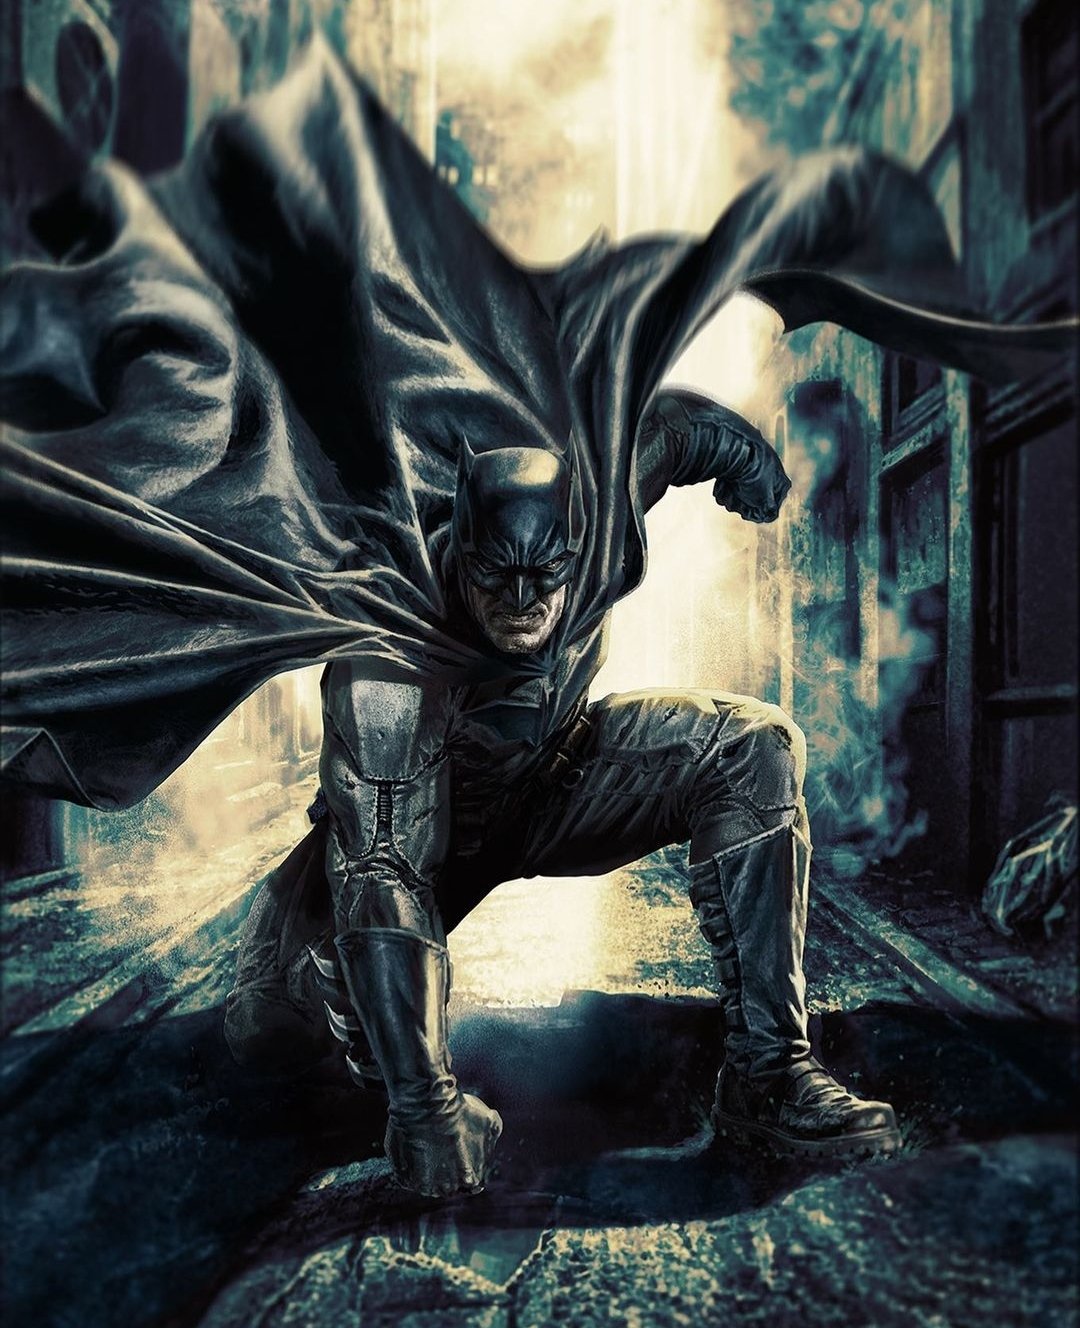 Bruce Wayne | ❓0❓❓ ? | on Twitter: 